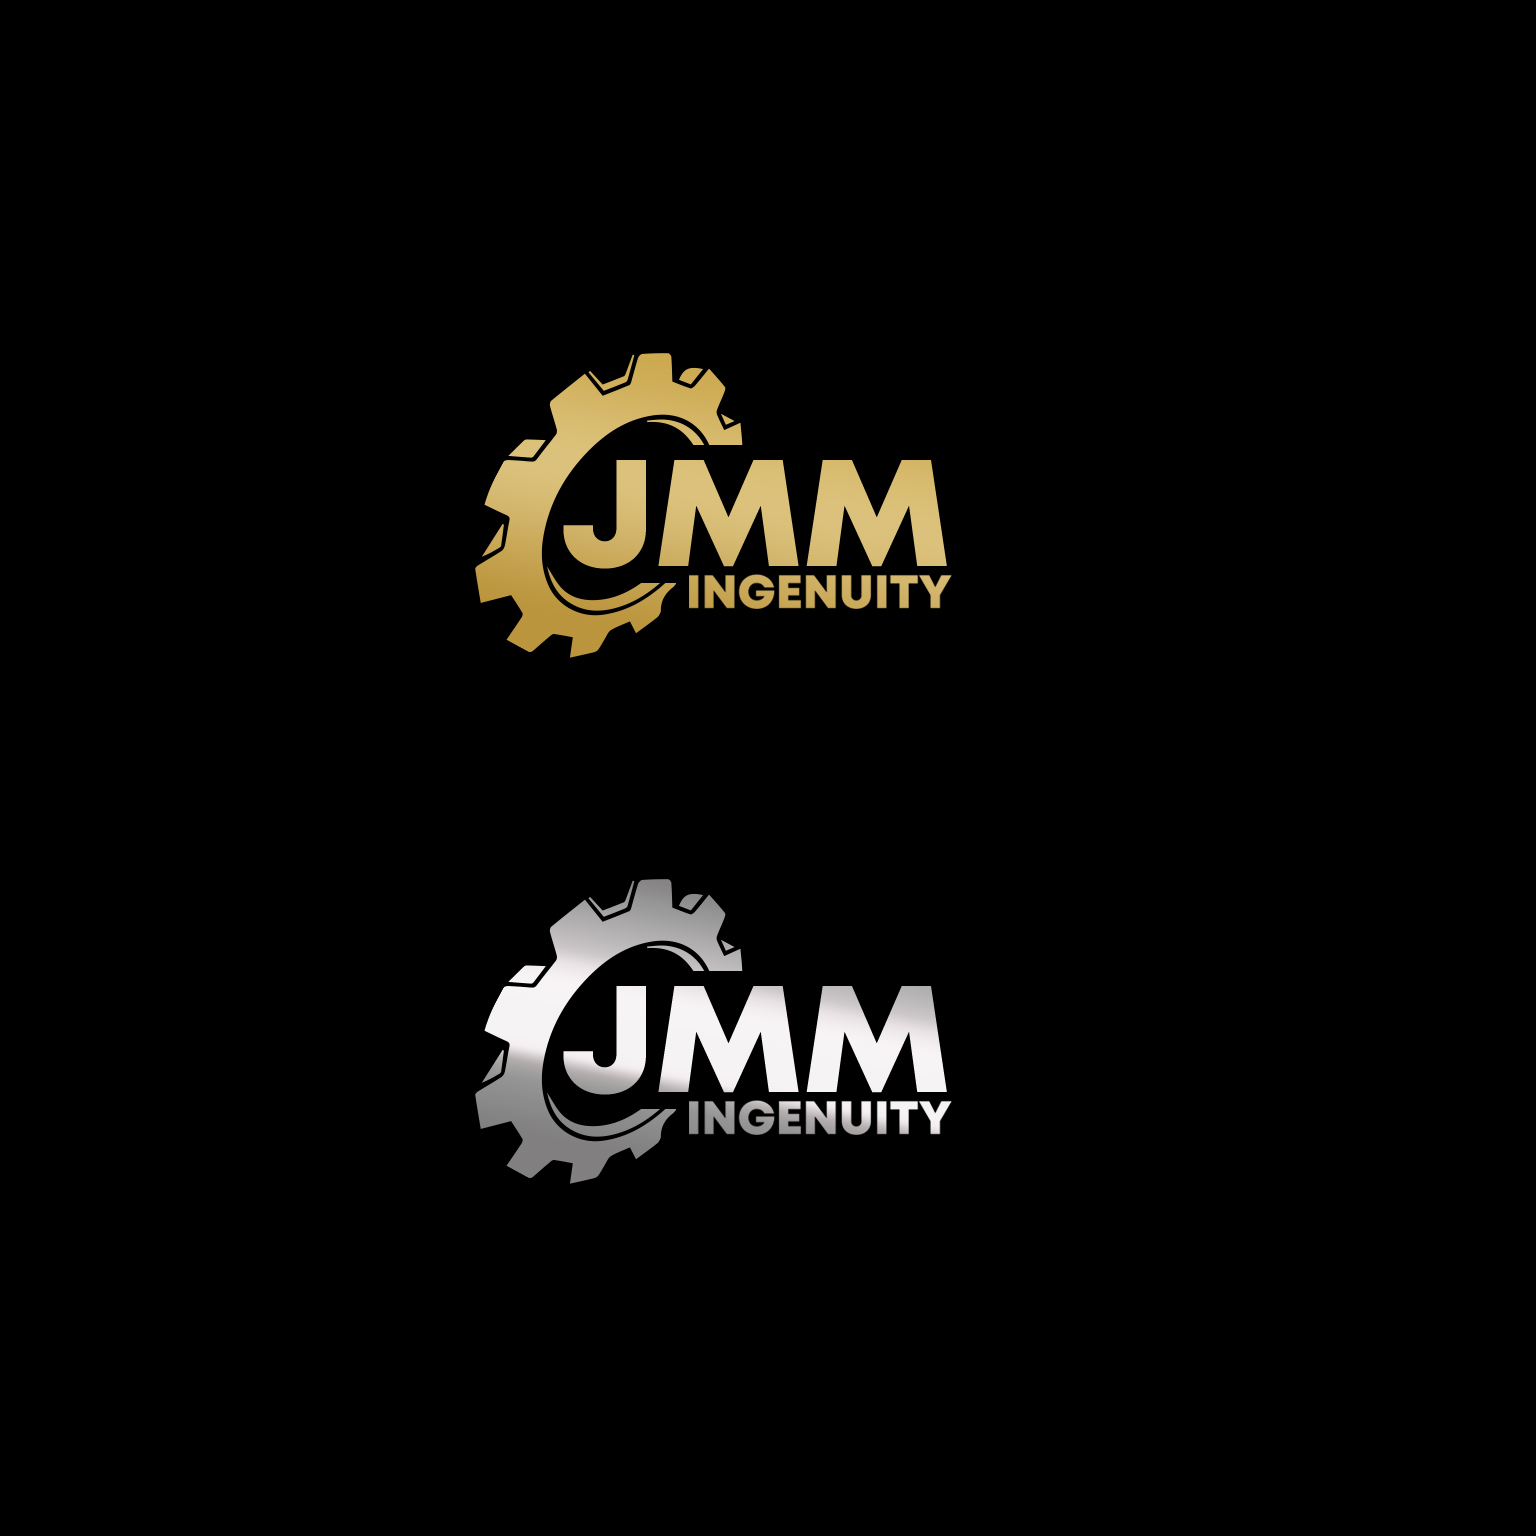 Jmm Symbol Images - Free Download on Freepik